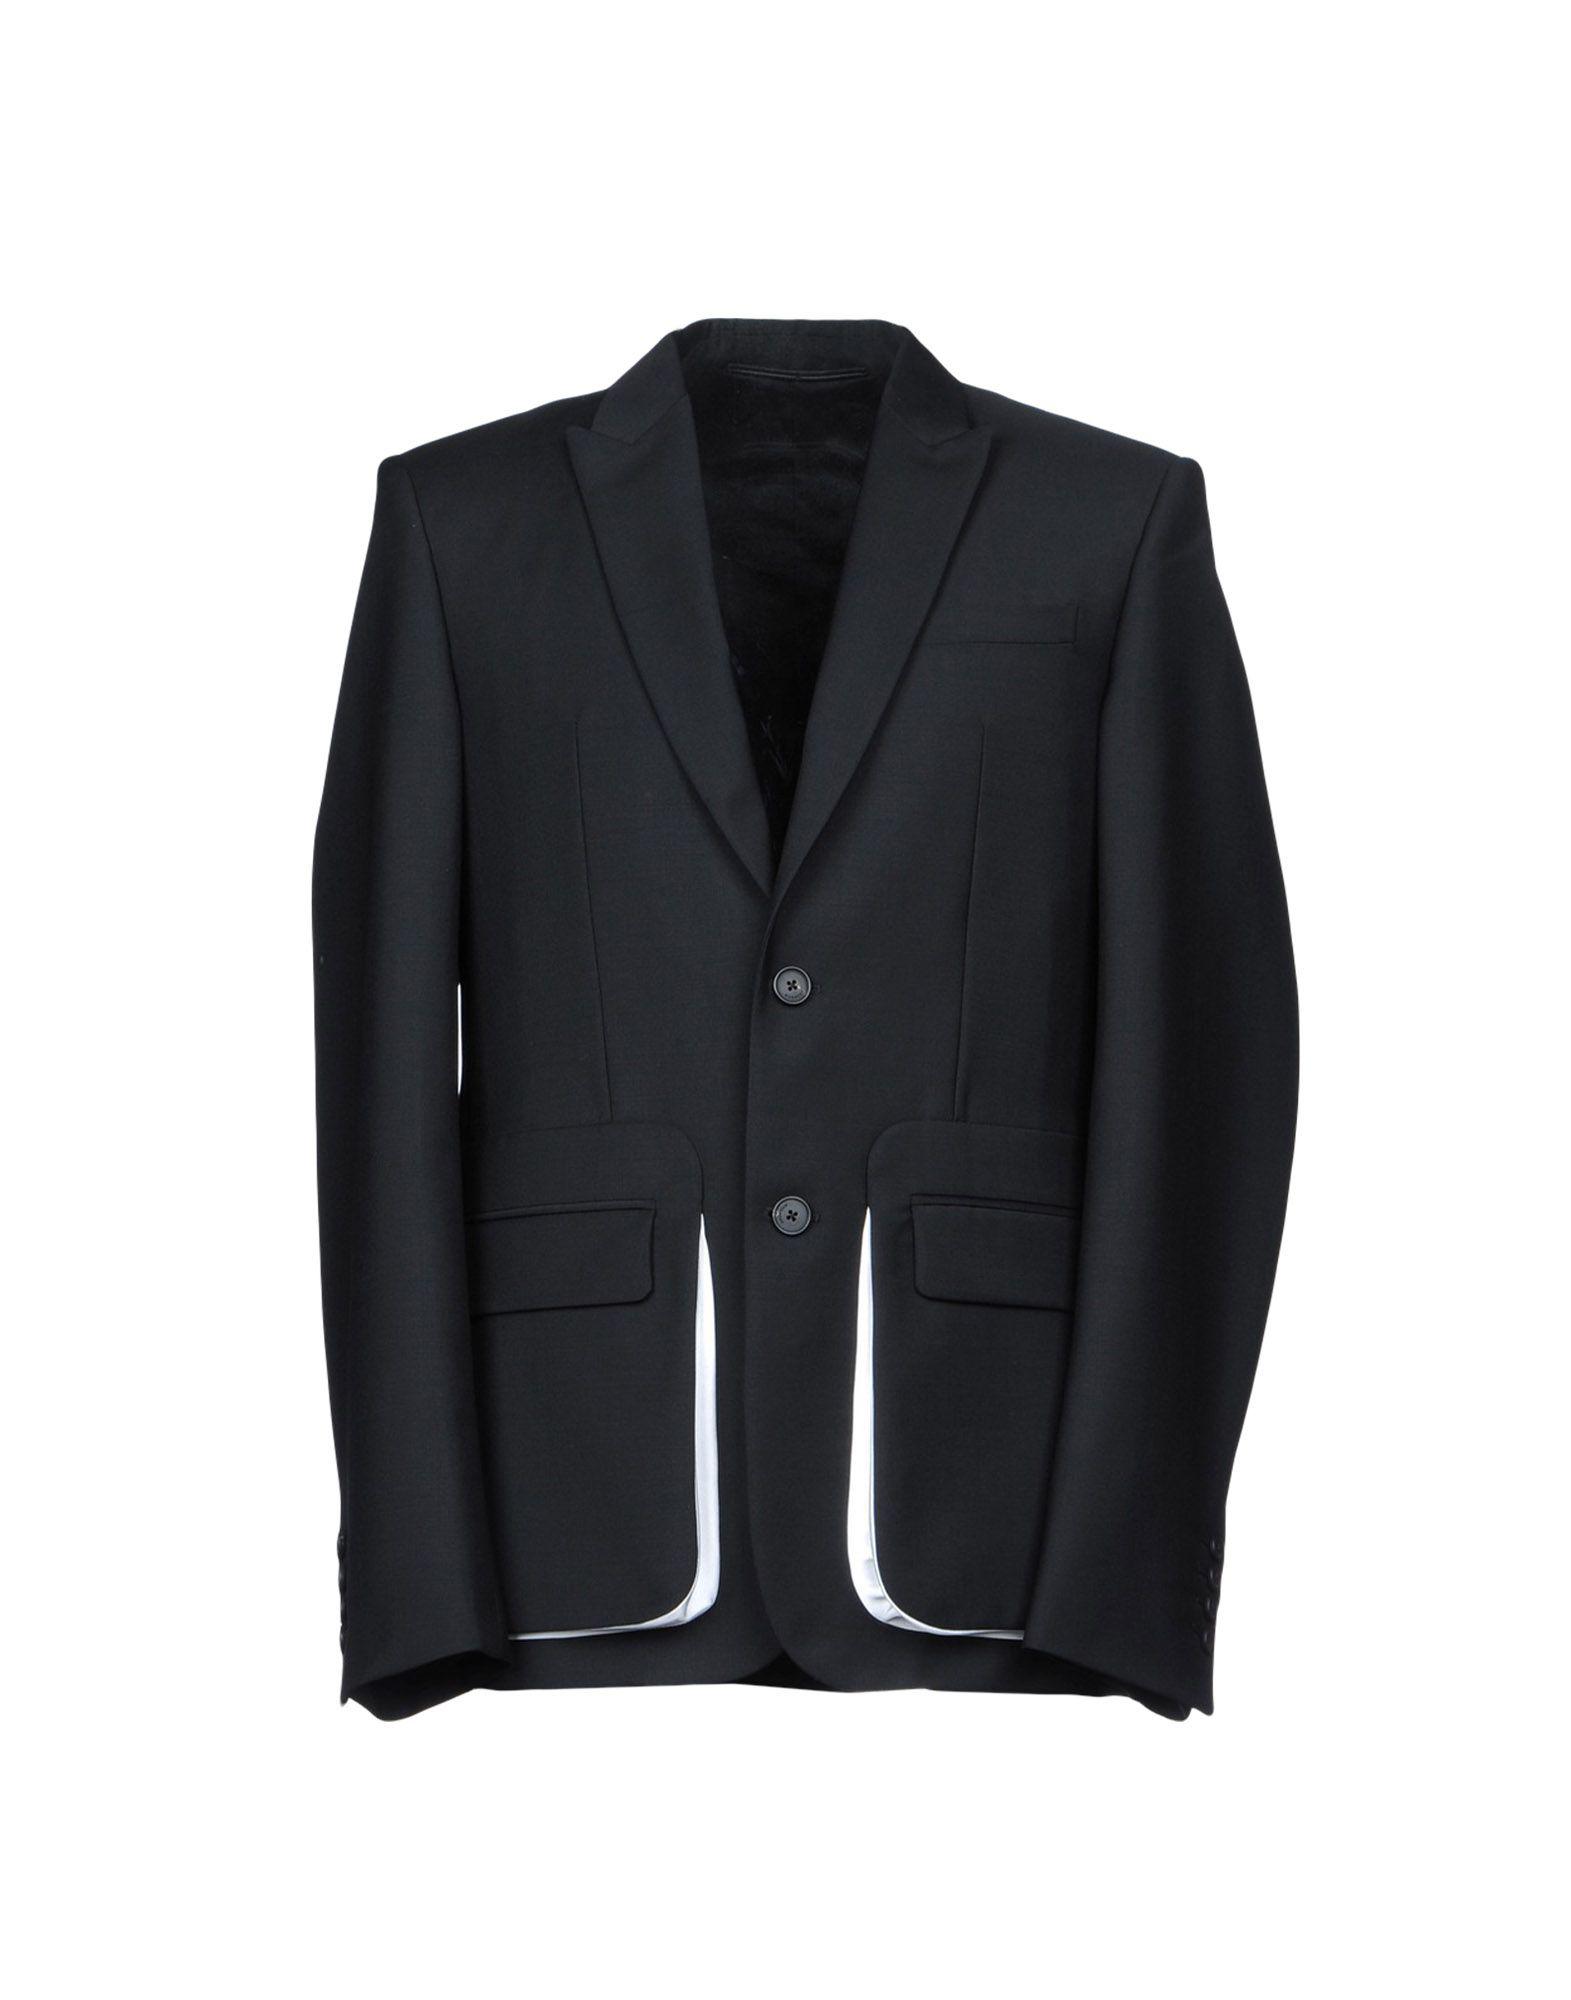 Givenchy Wool Blazer in Black for Men - Lyst